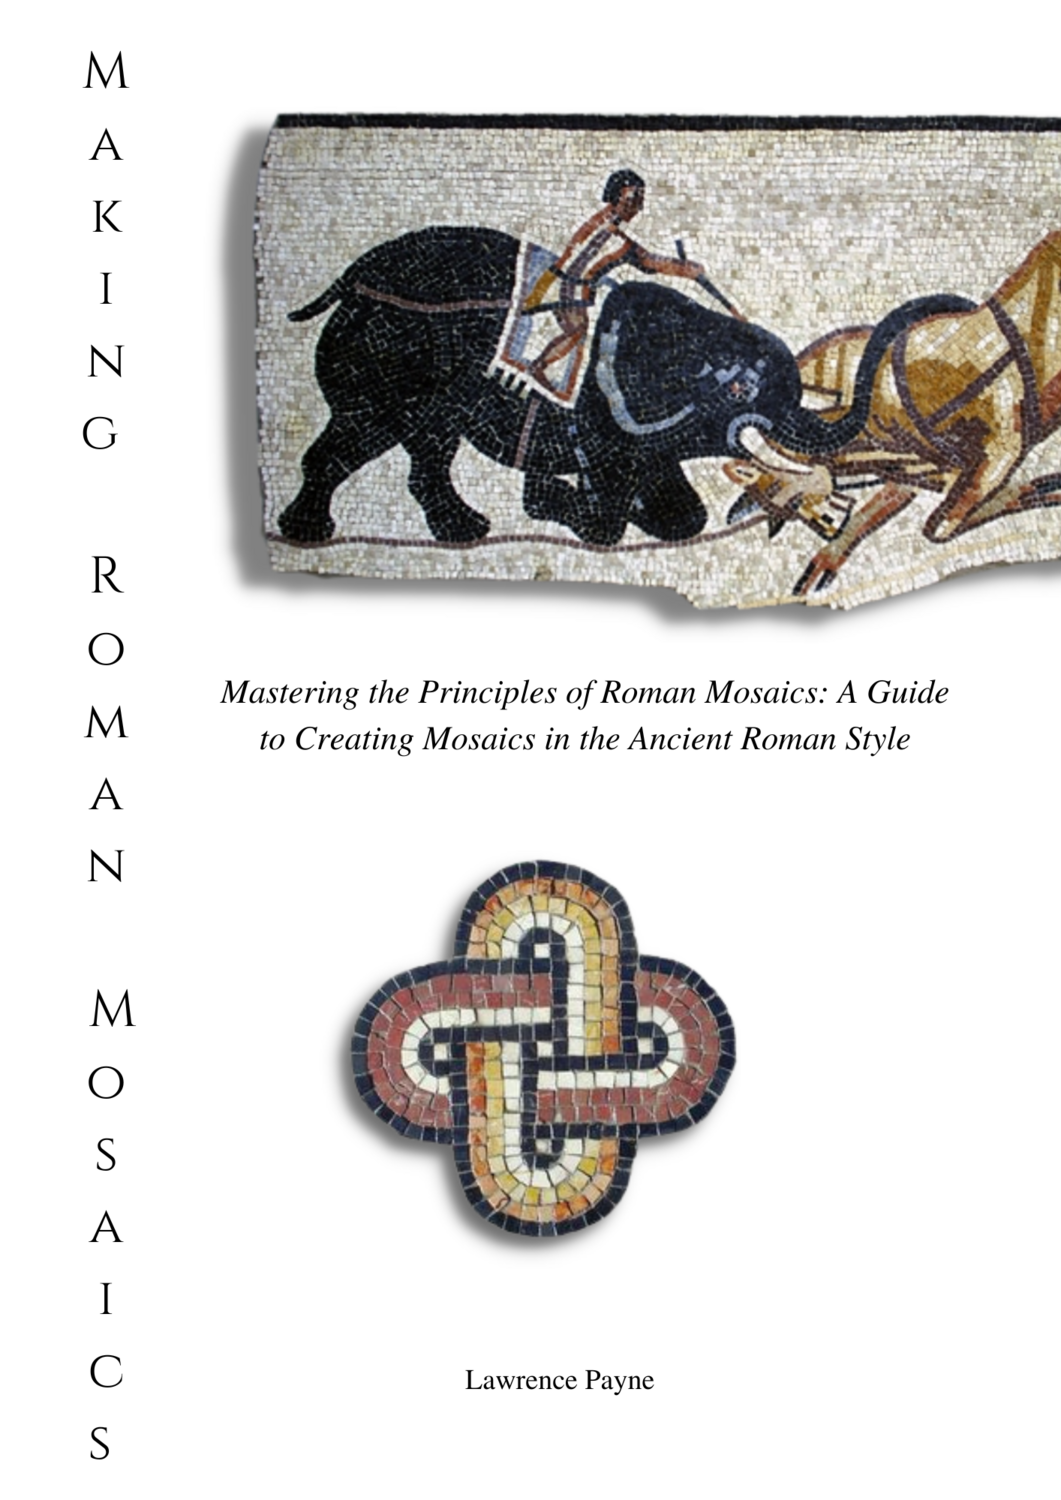 Making Roman Mosaics - The Foundation Workbook